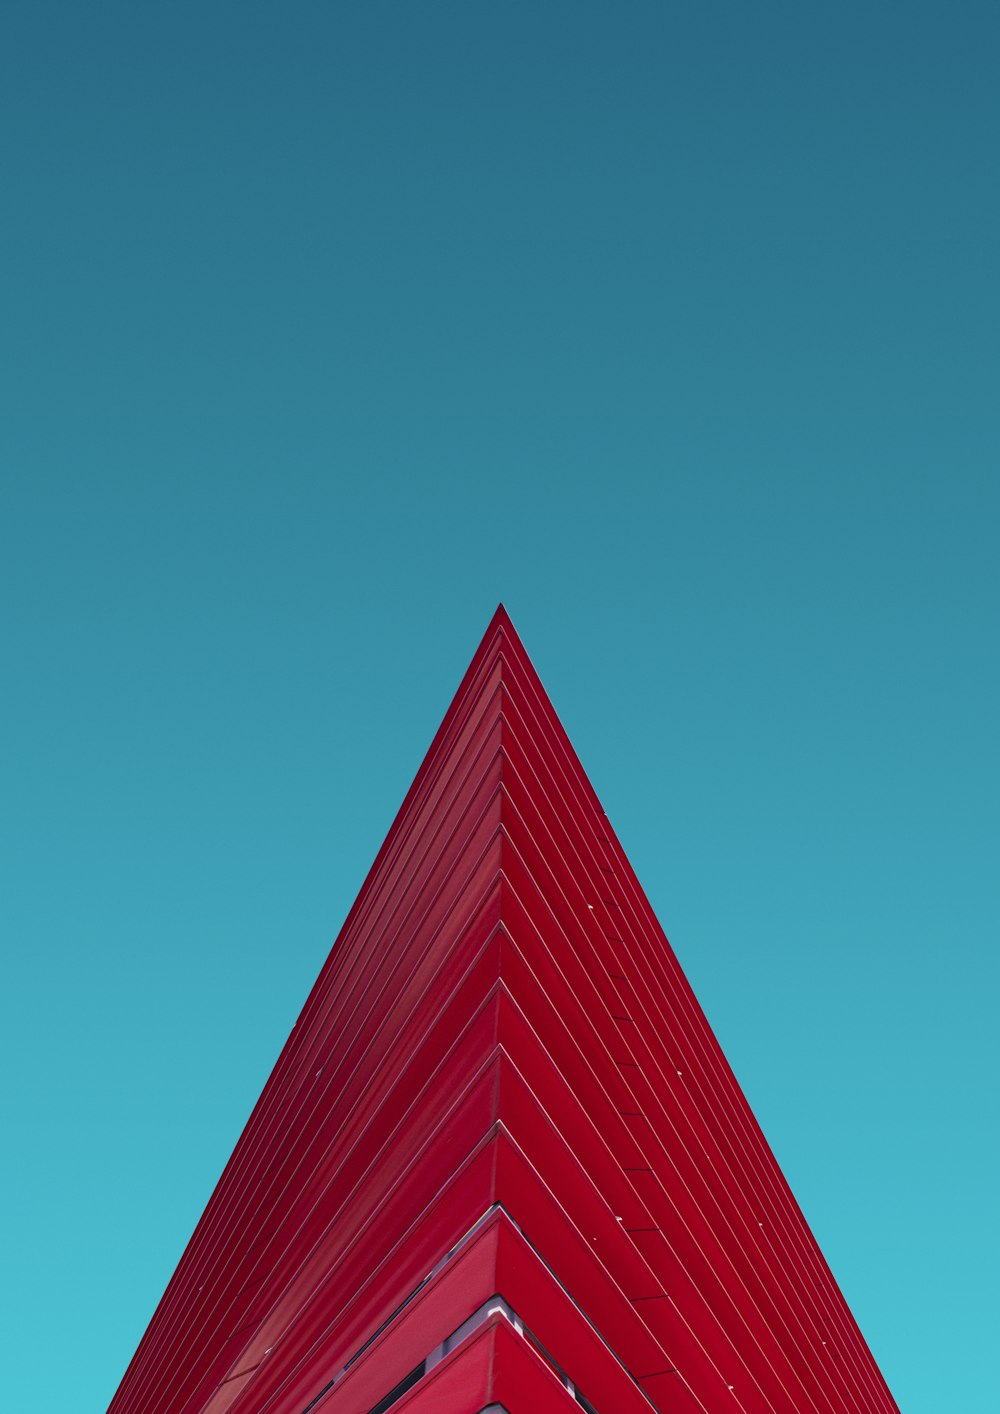 un edificio rojo de forma triangular contra un cielo azul